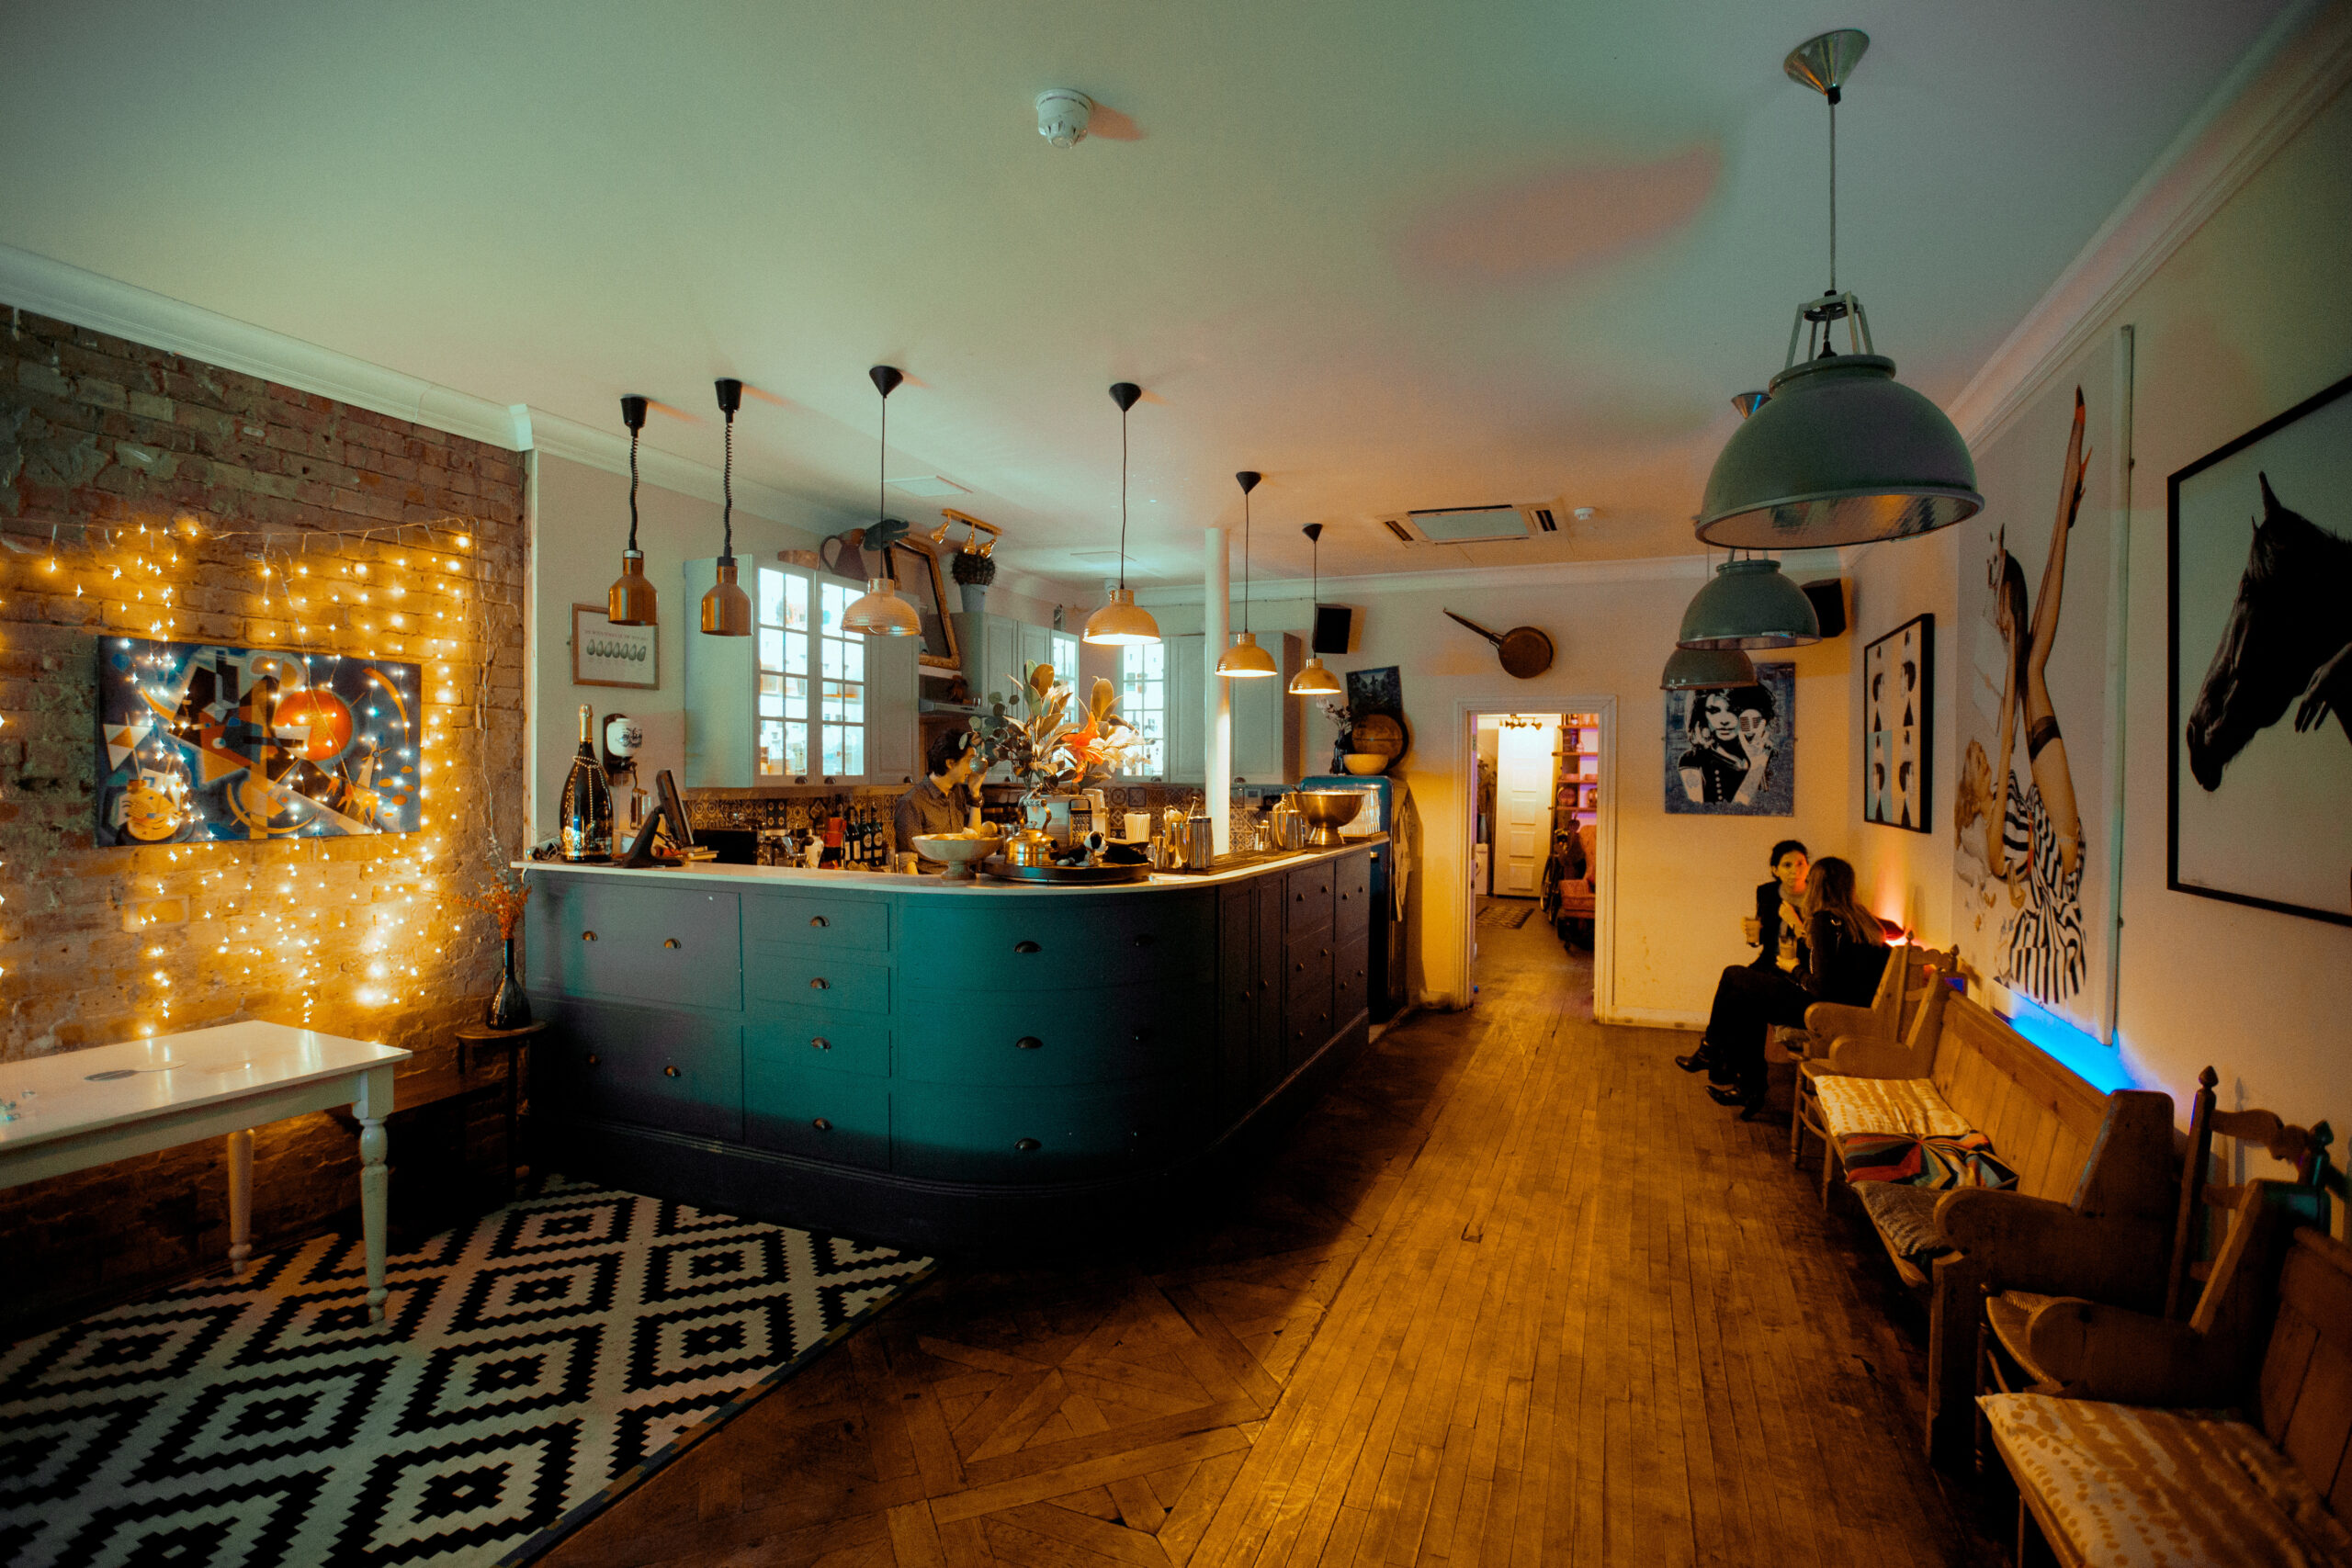 Little Blue Door interior - kitchen-bar hybrid with colourful tiles